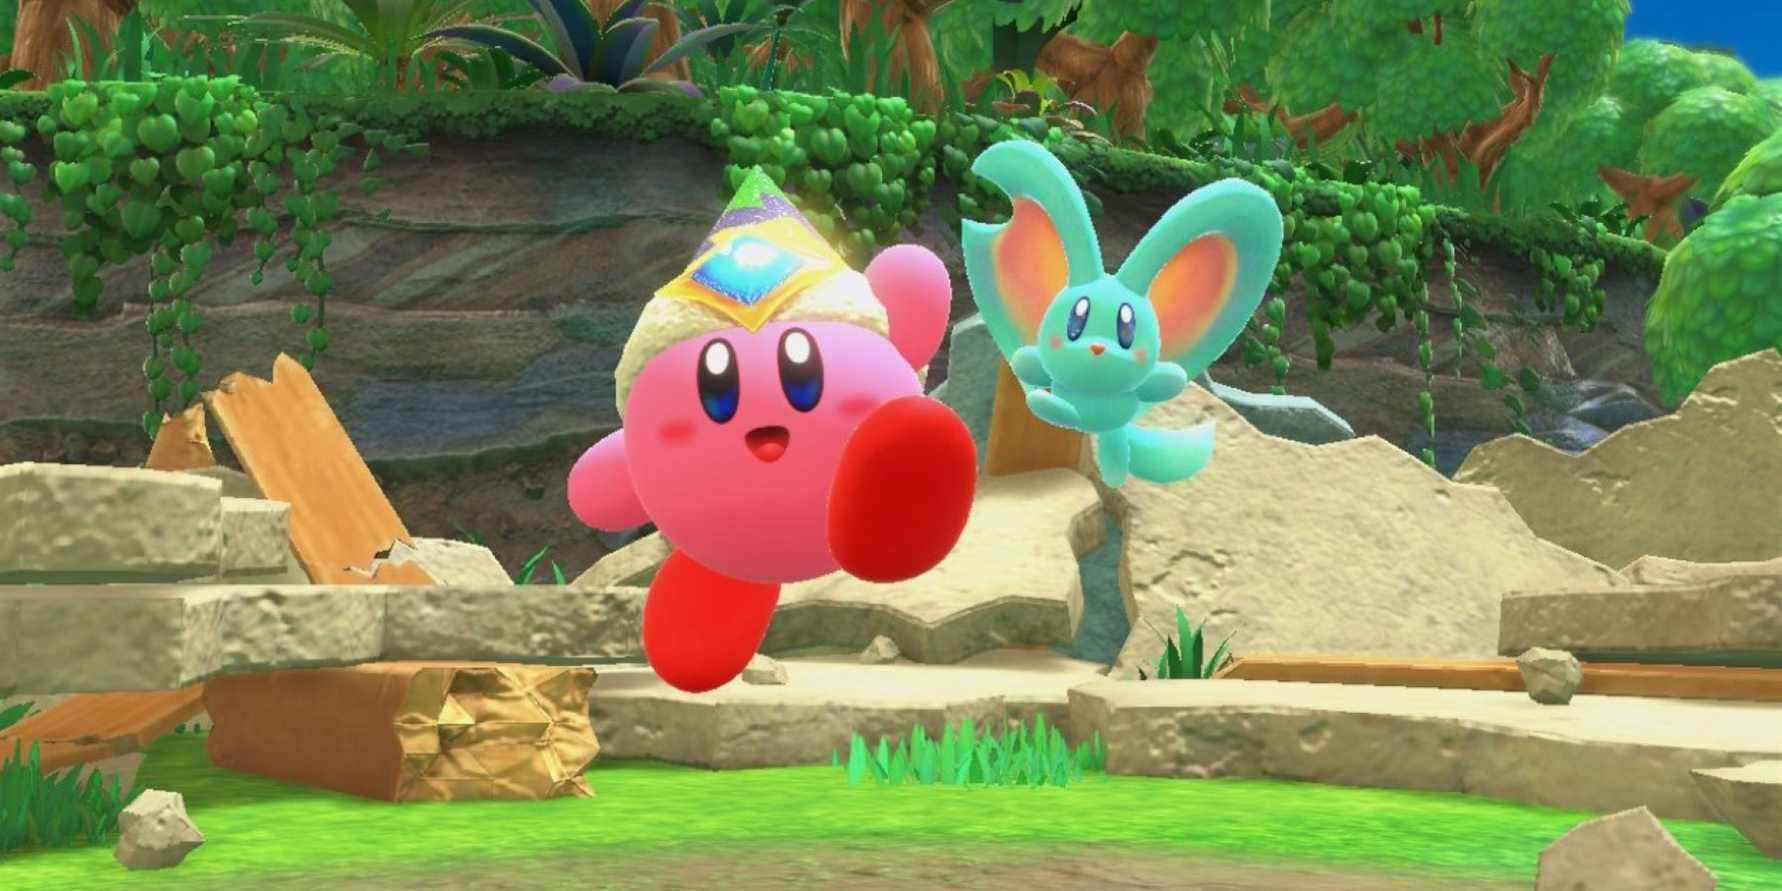 Elfilin et Bomb Kirby applaudissent dans l'introduction de Kirby and the Forgotten Land